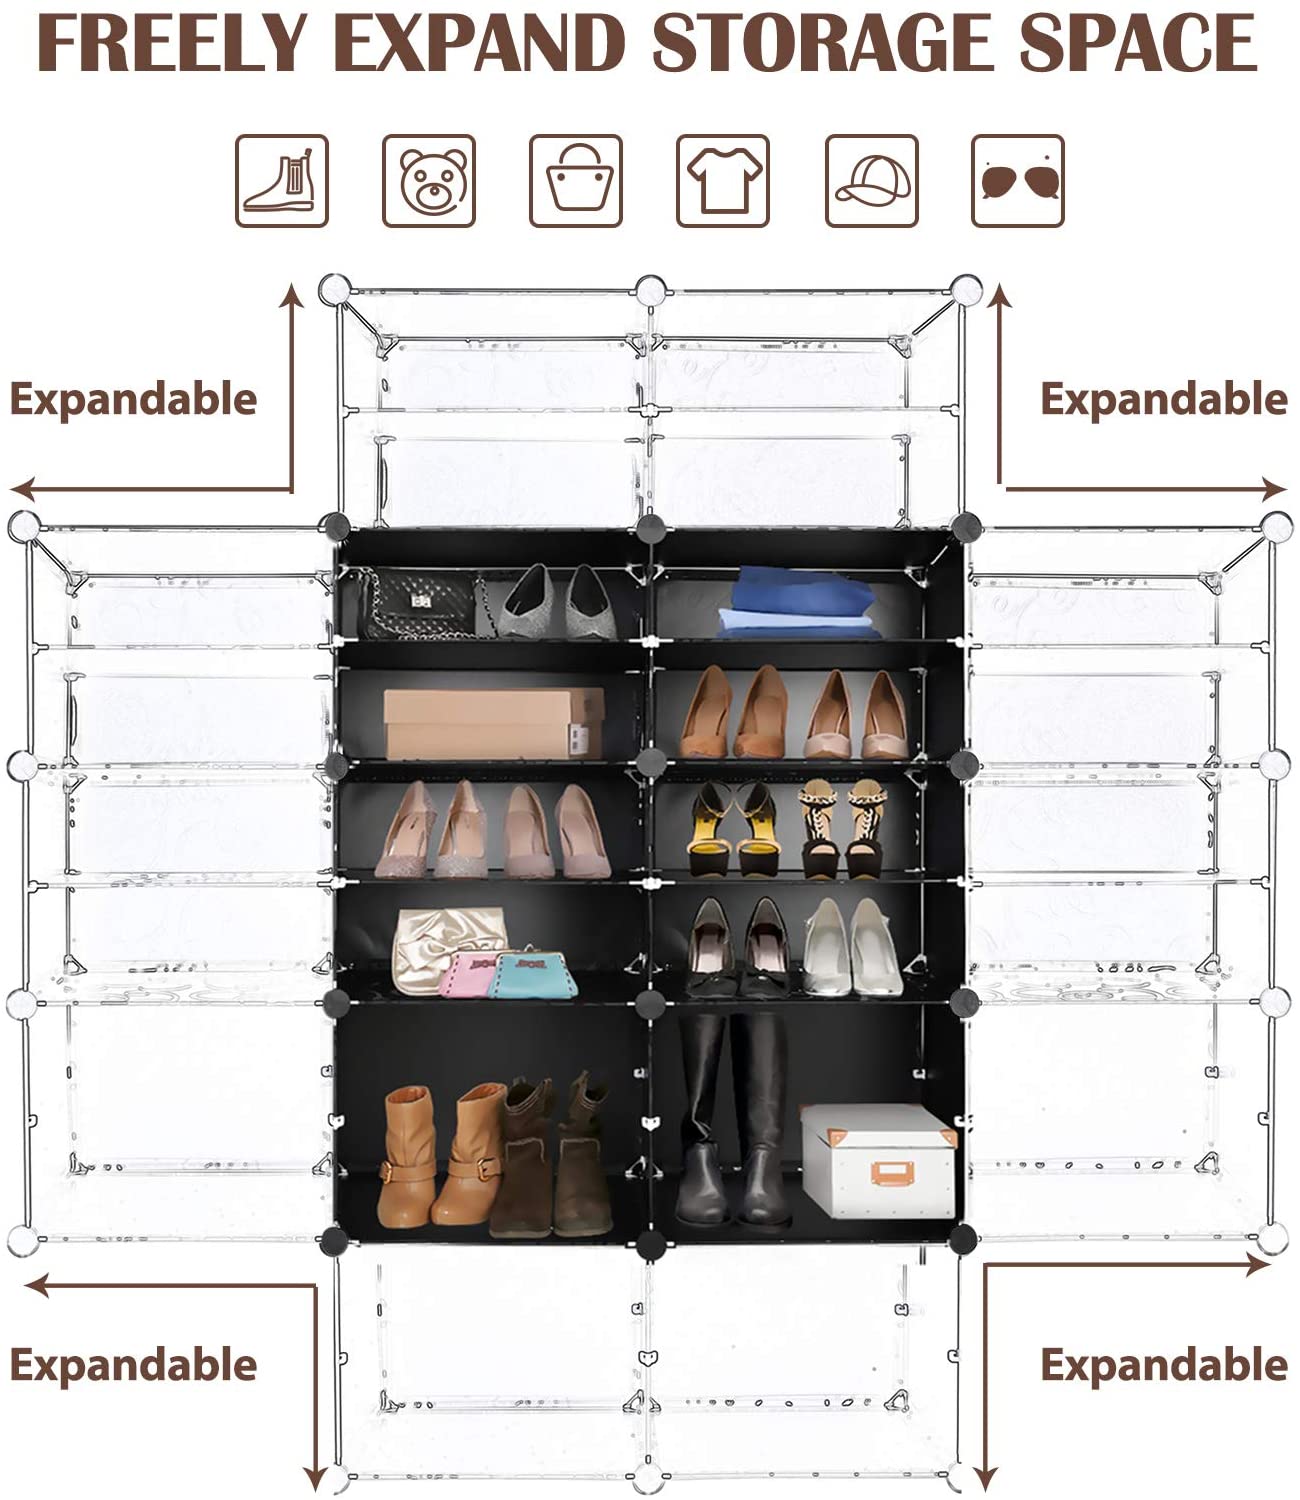 Portable Shoe Rack Organizer, 6-Tier Plastic Cube Storage Tower